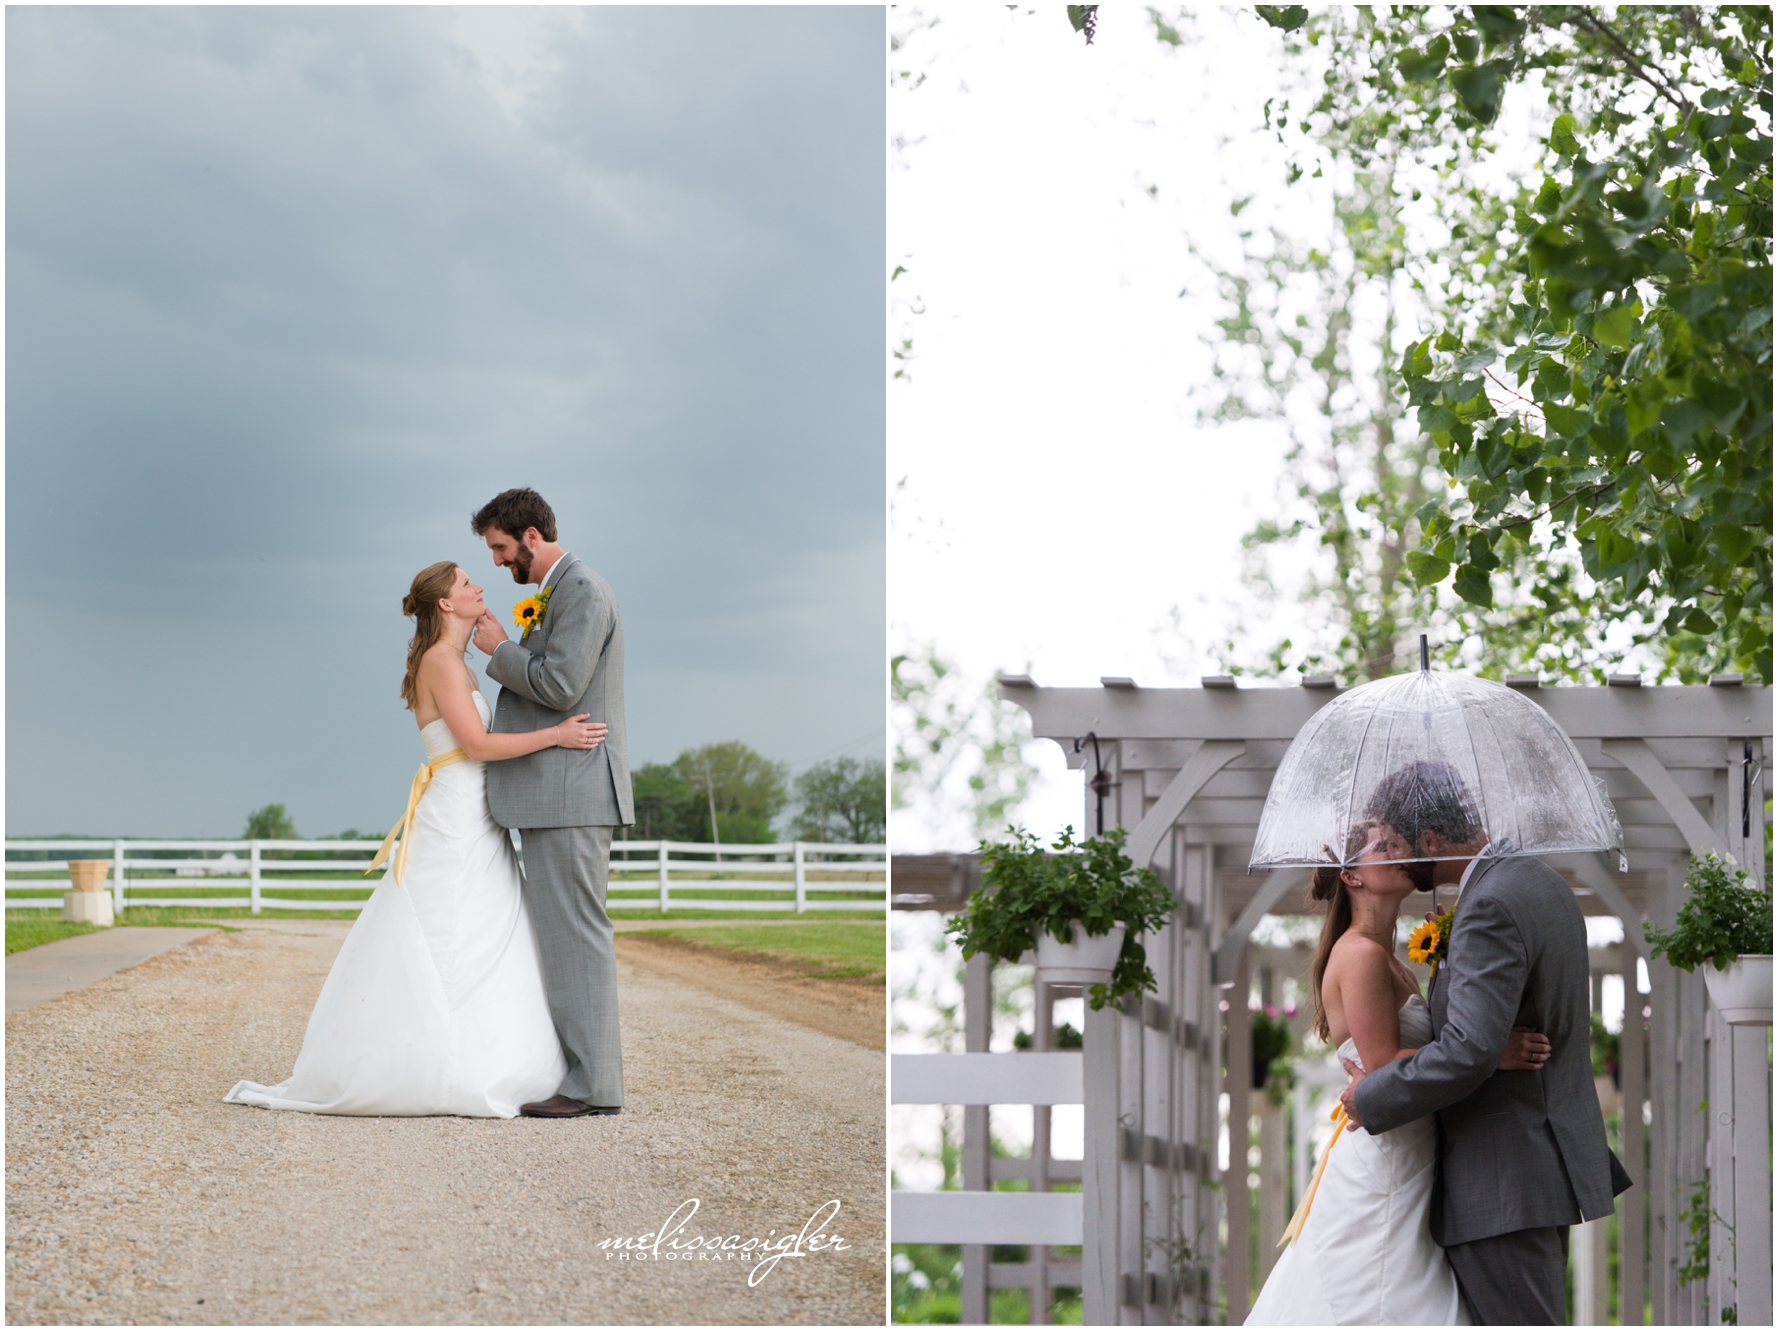 Rainy wedding day at Victorian Veranda by Lawrence Kansas wedding photographer Melissa Sigler